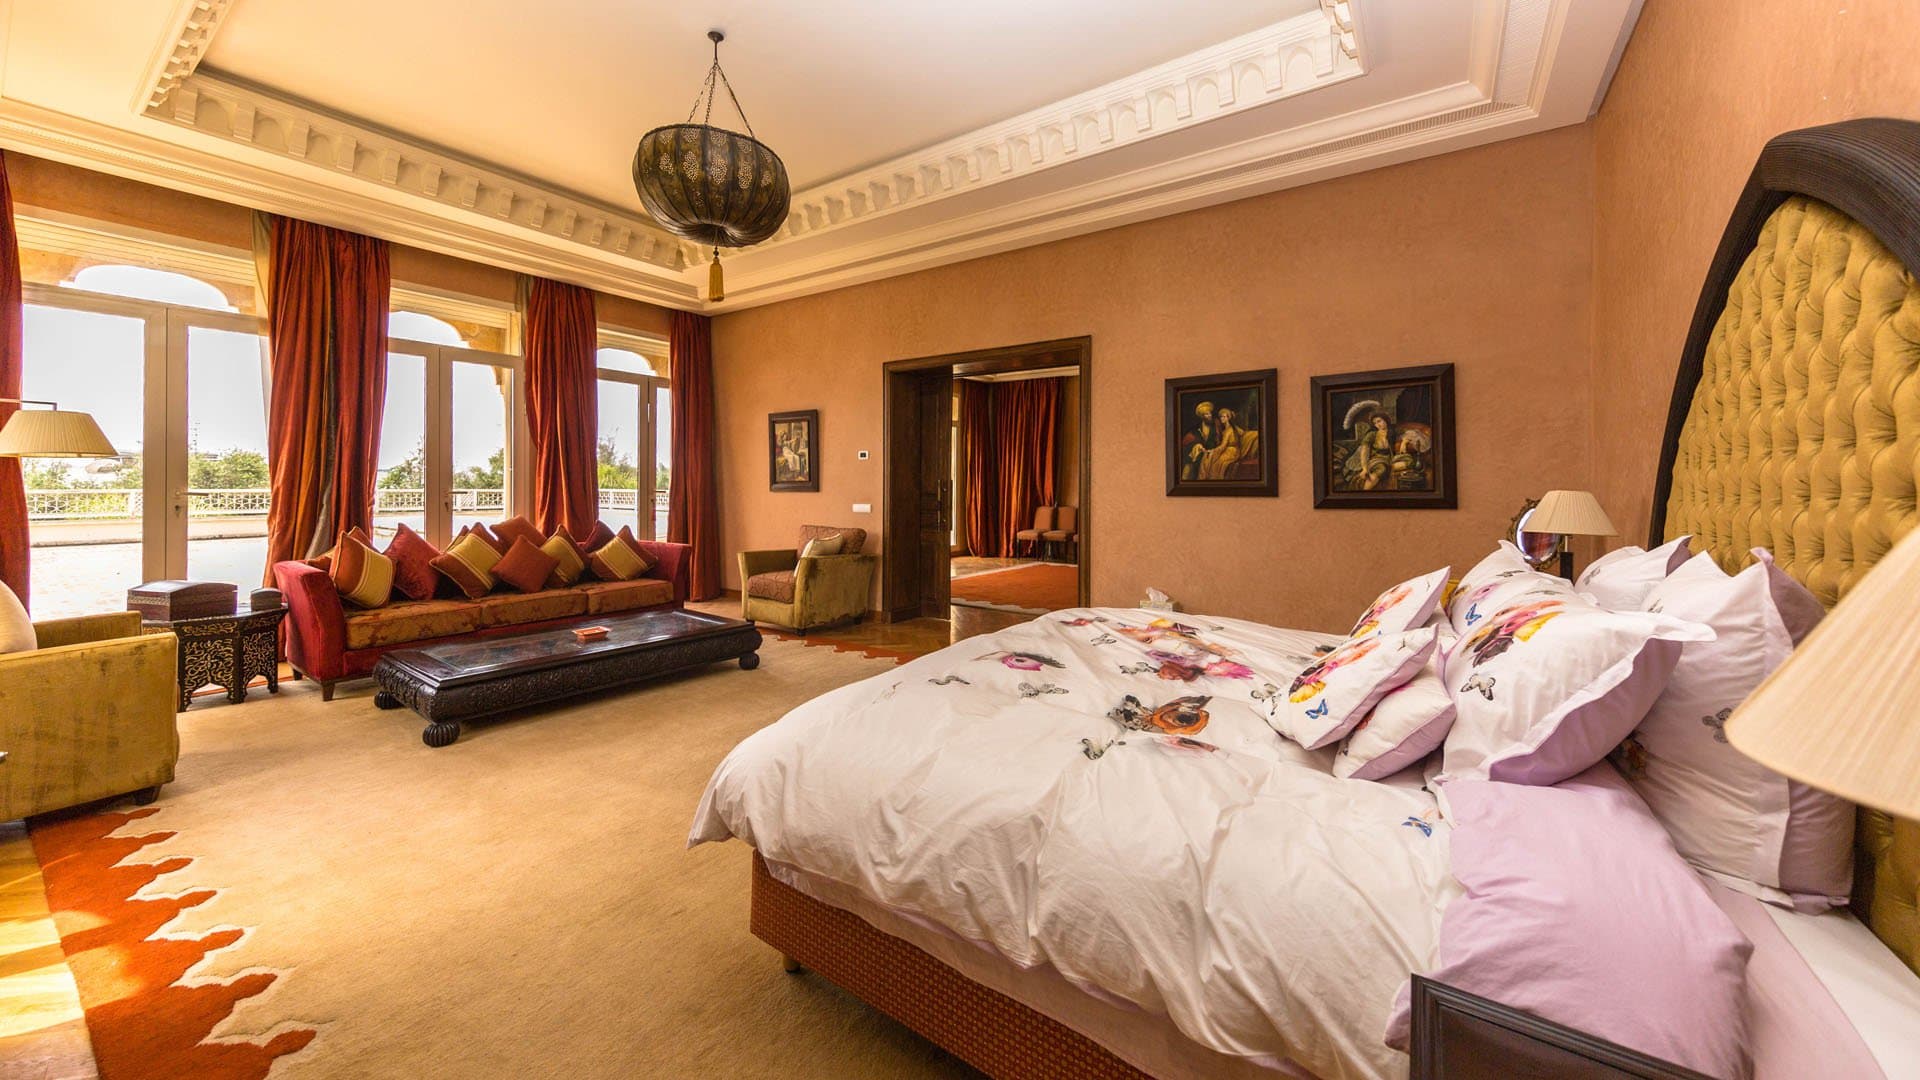 6 Bedroom Villa For Sale Marrakech Lp08722 6f60c5985b04180.jpg